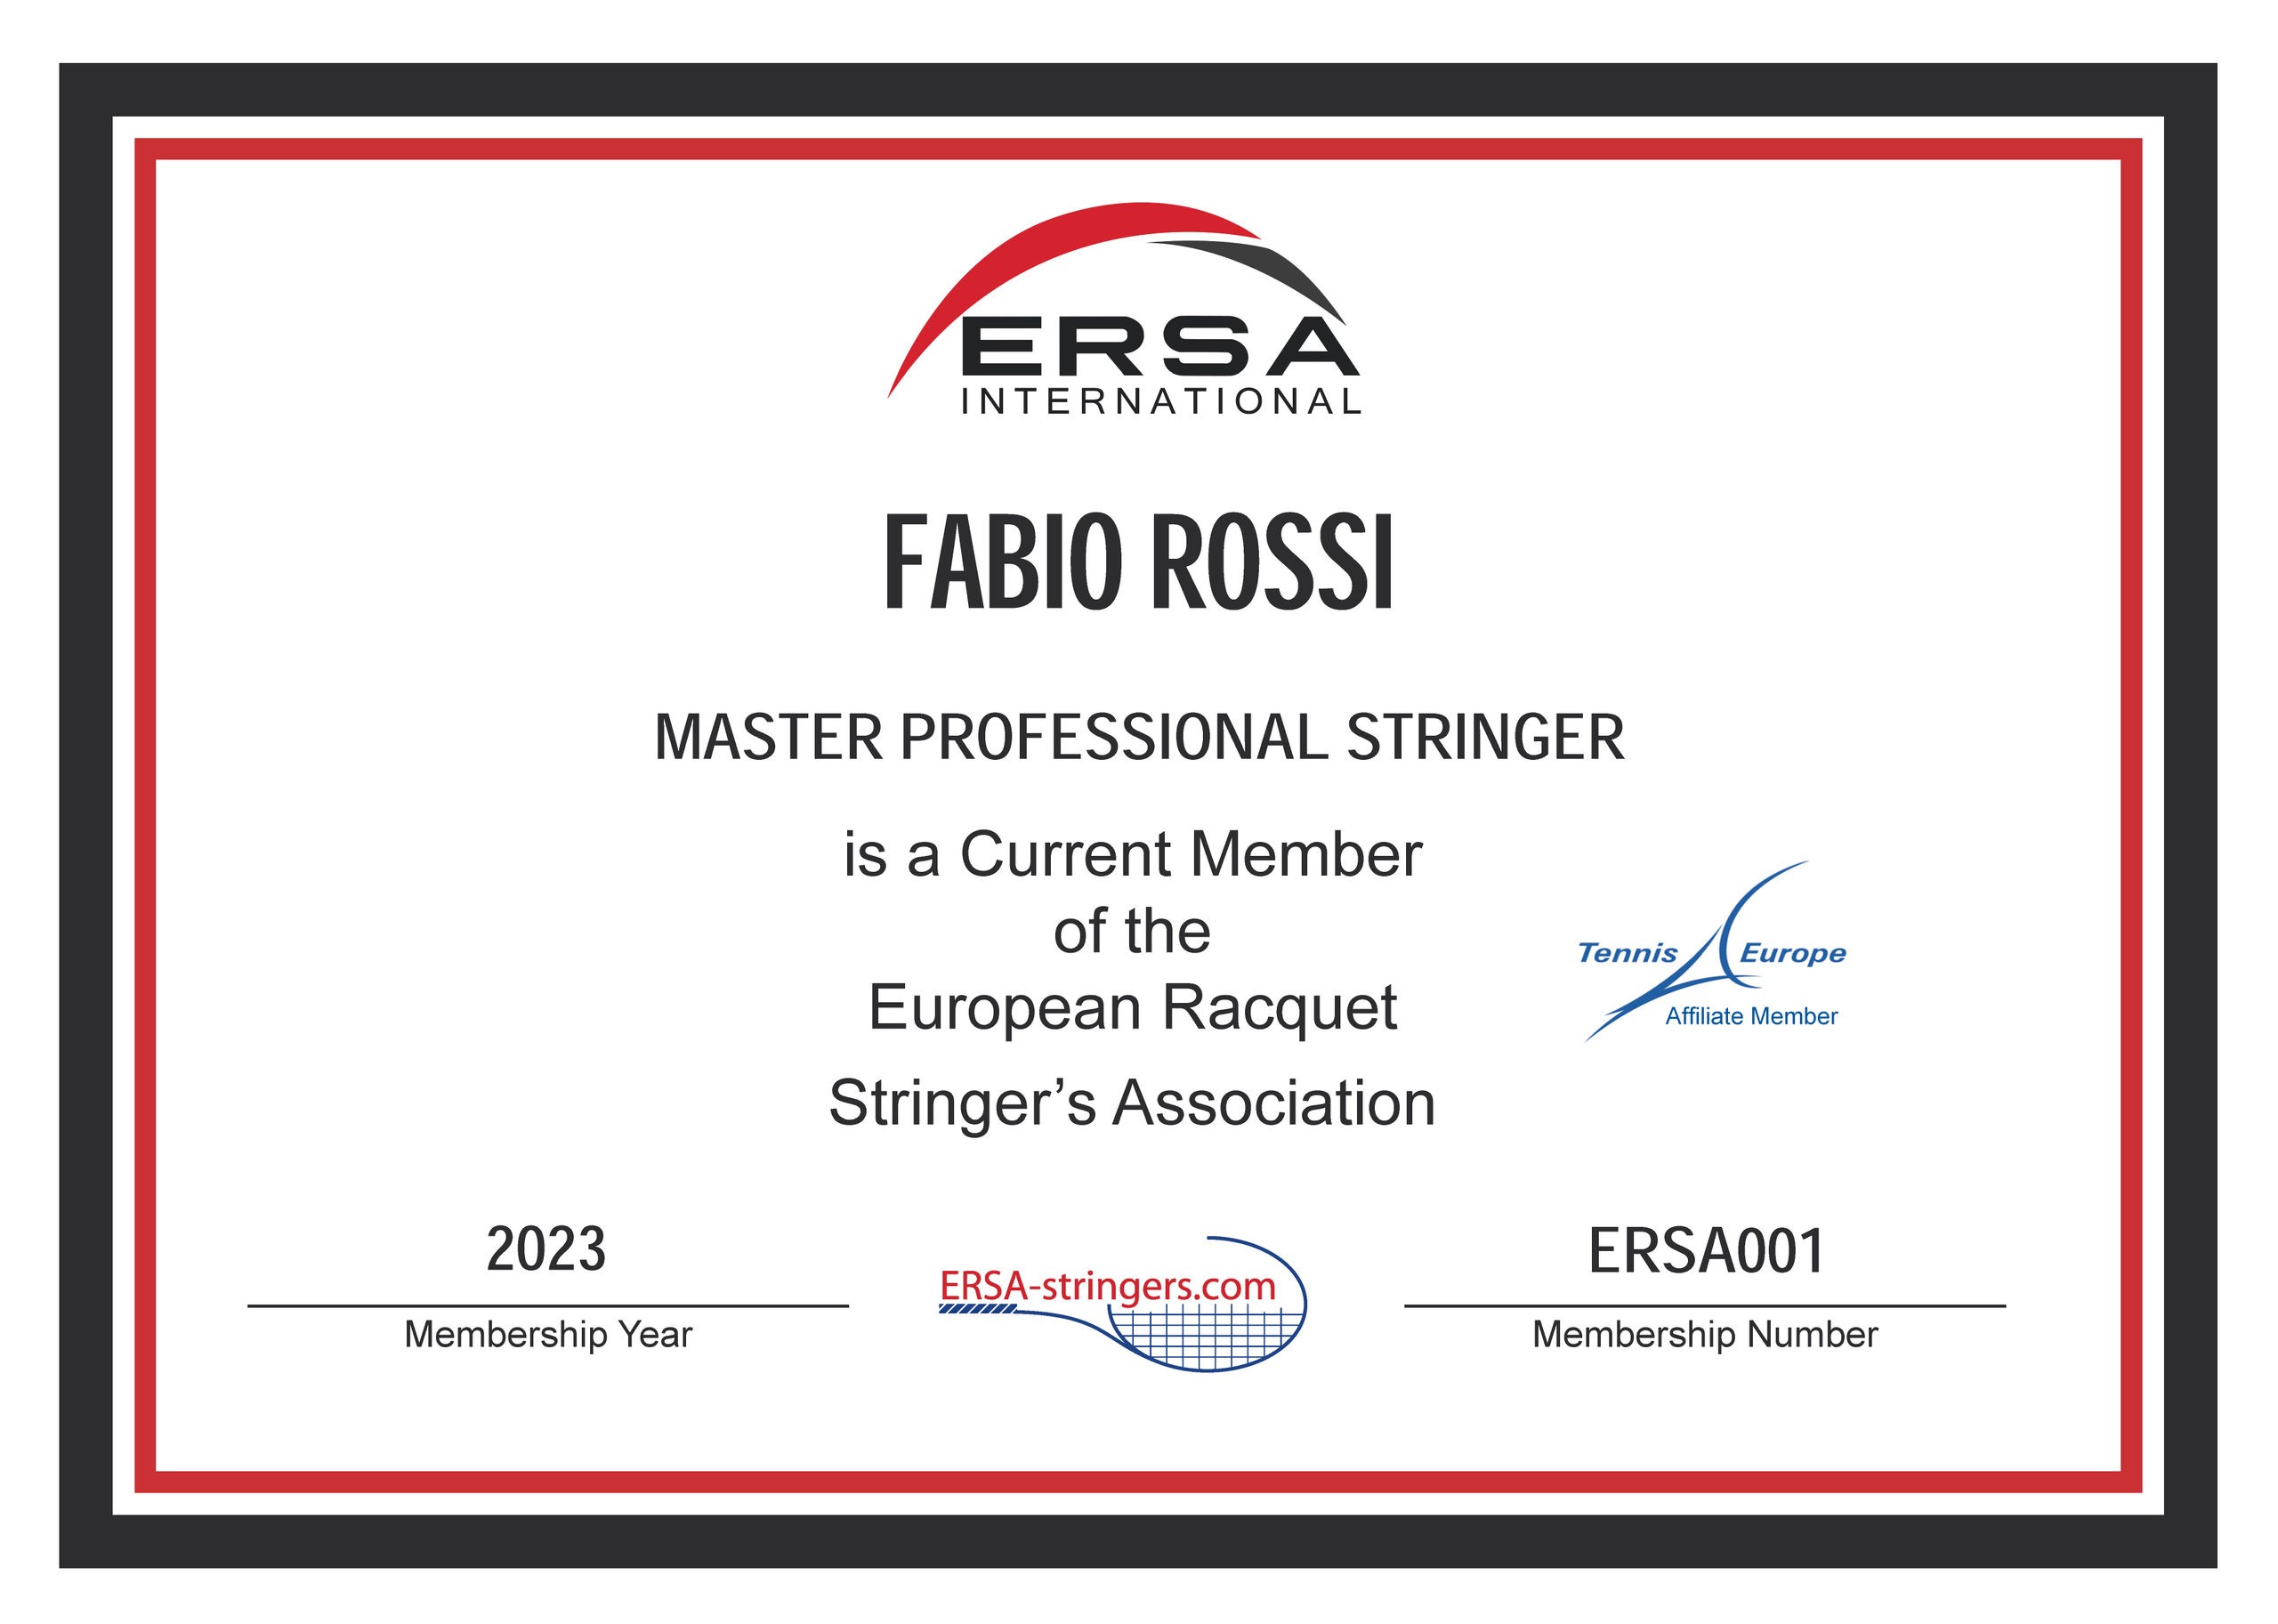 Certificazione ERSA Master Professional Stringer